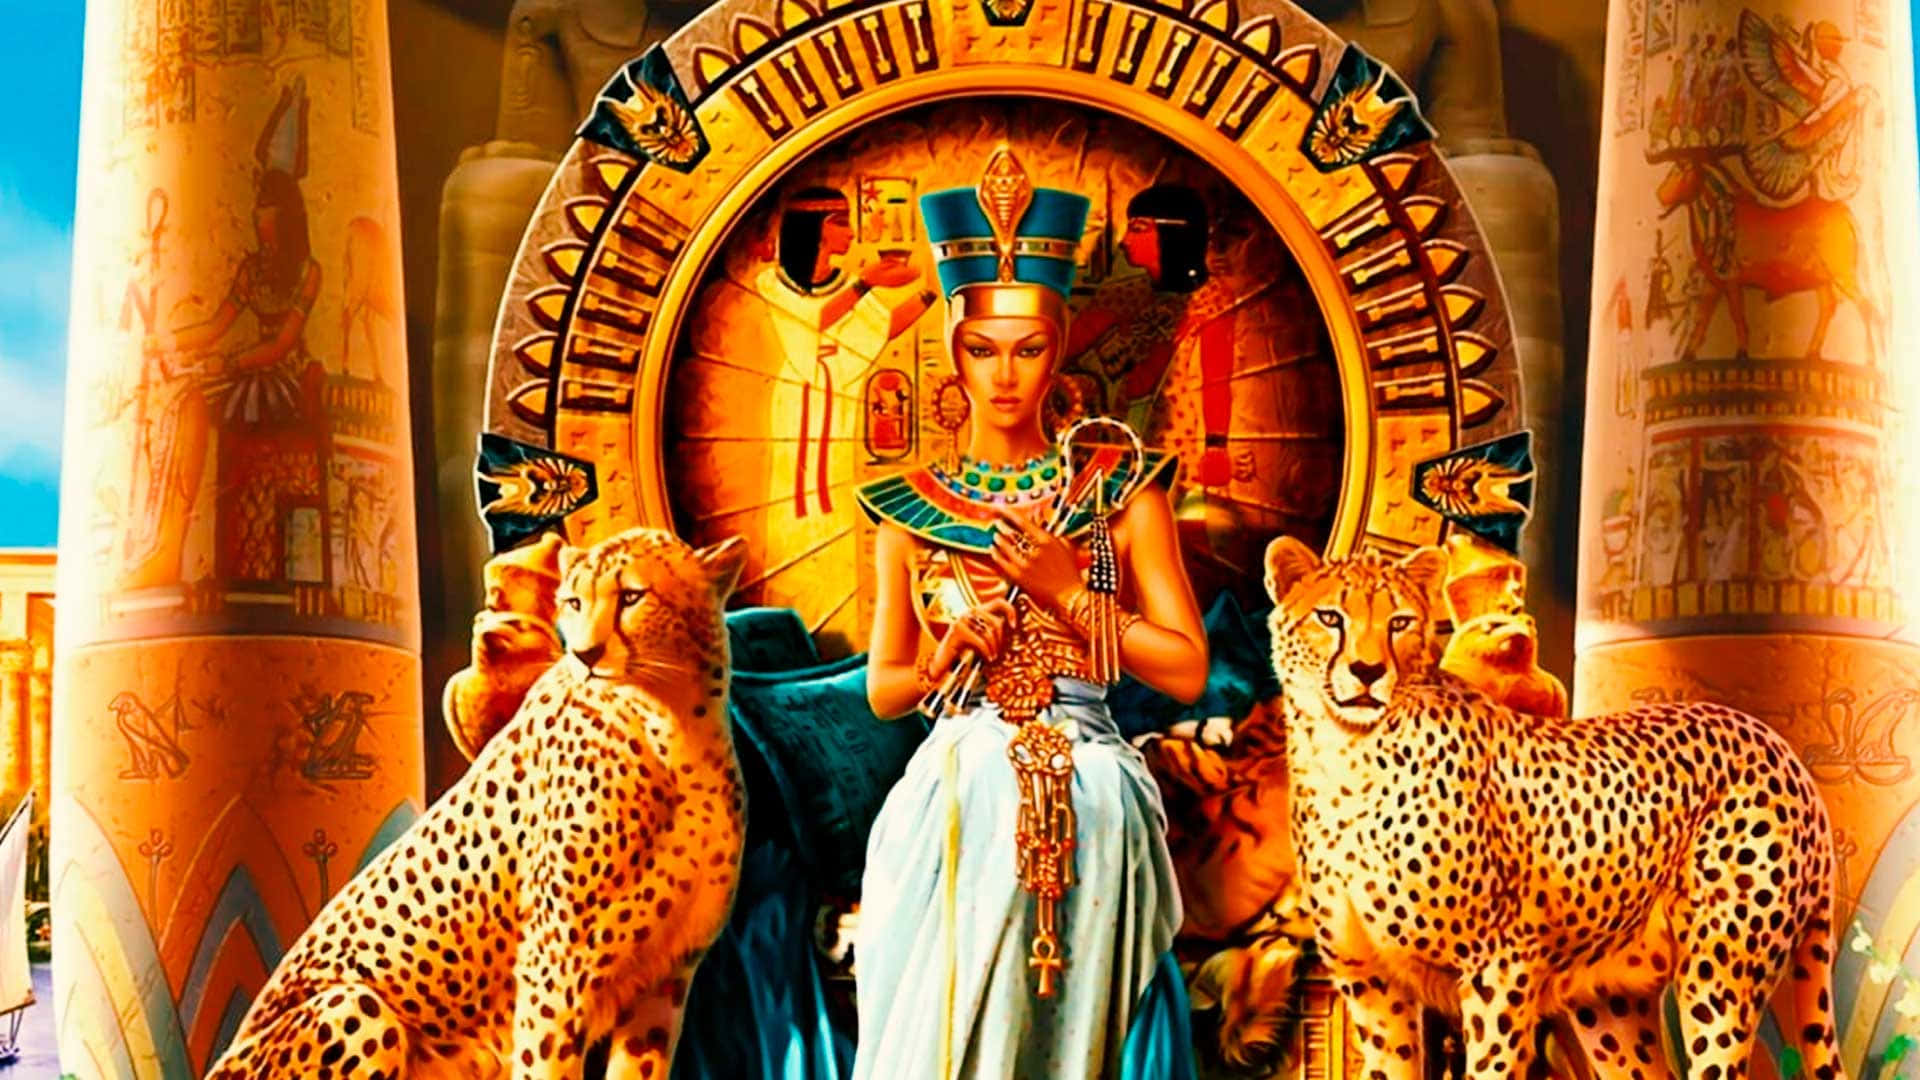 Cleopatra,l'iconica Regina D'egitto